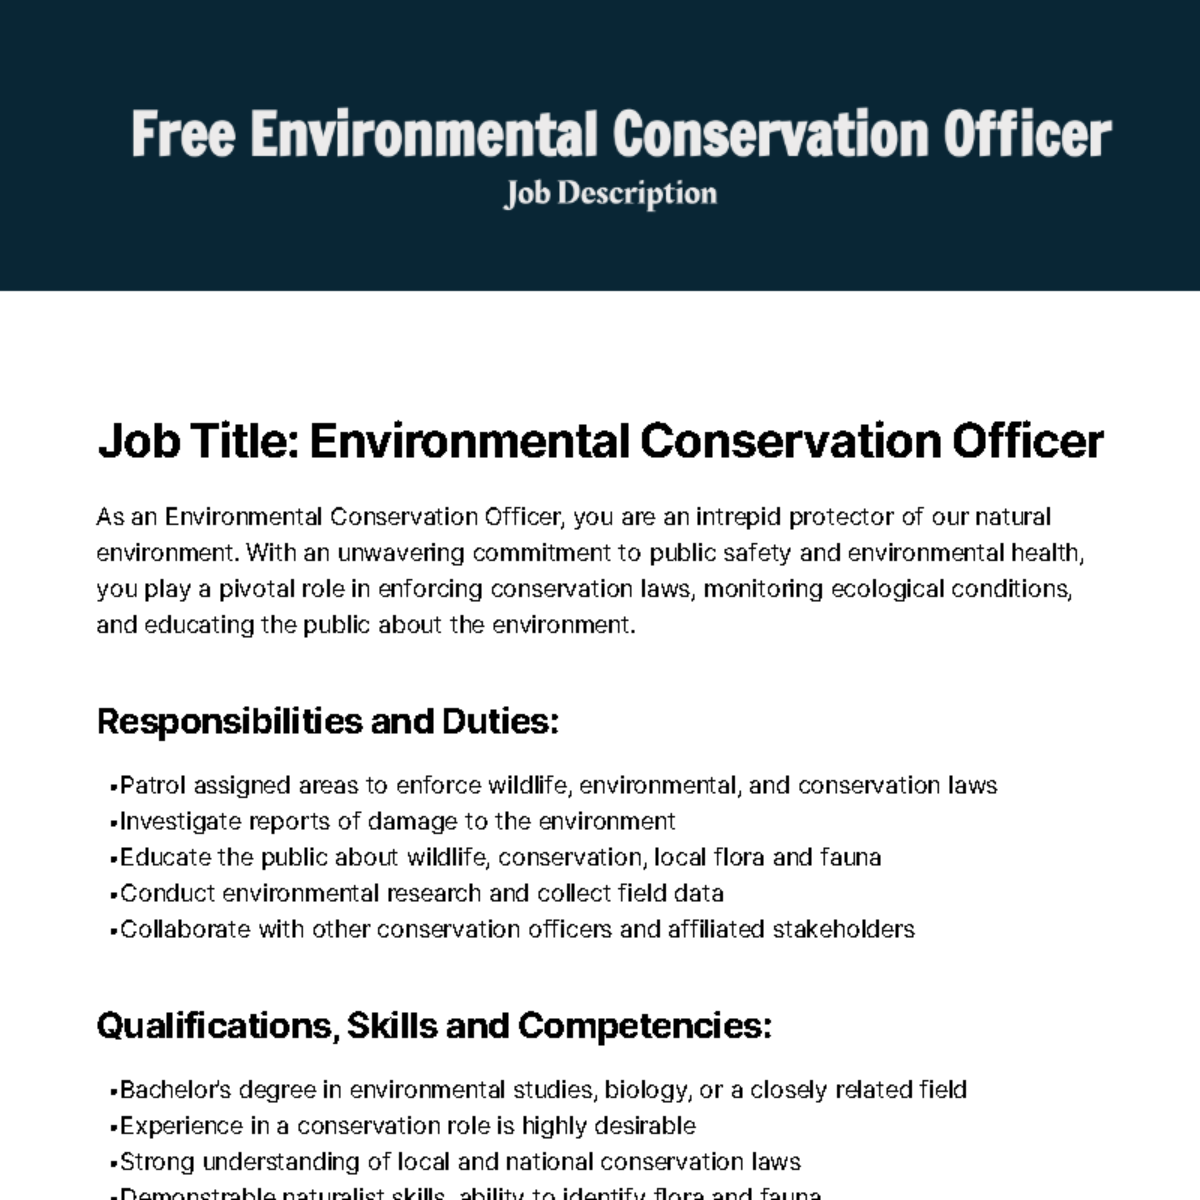 Free Environmental Conservation Officer Job Description Template